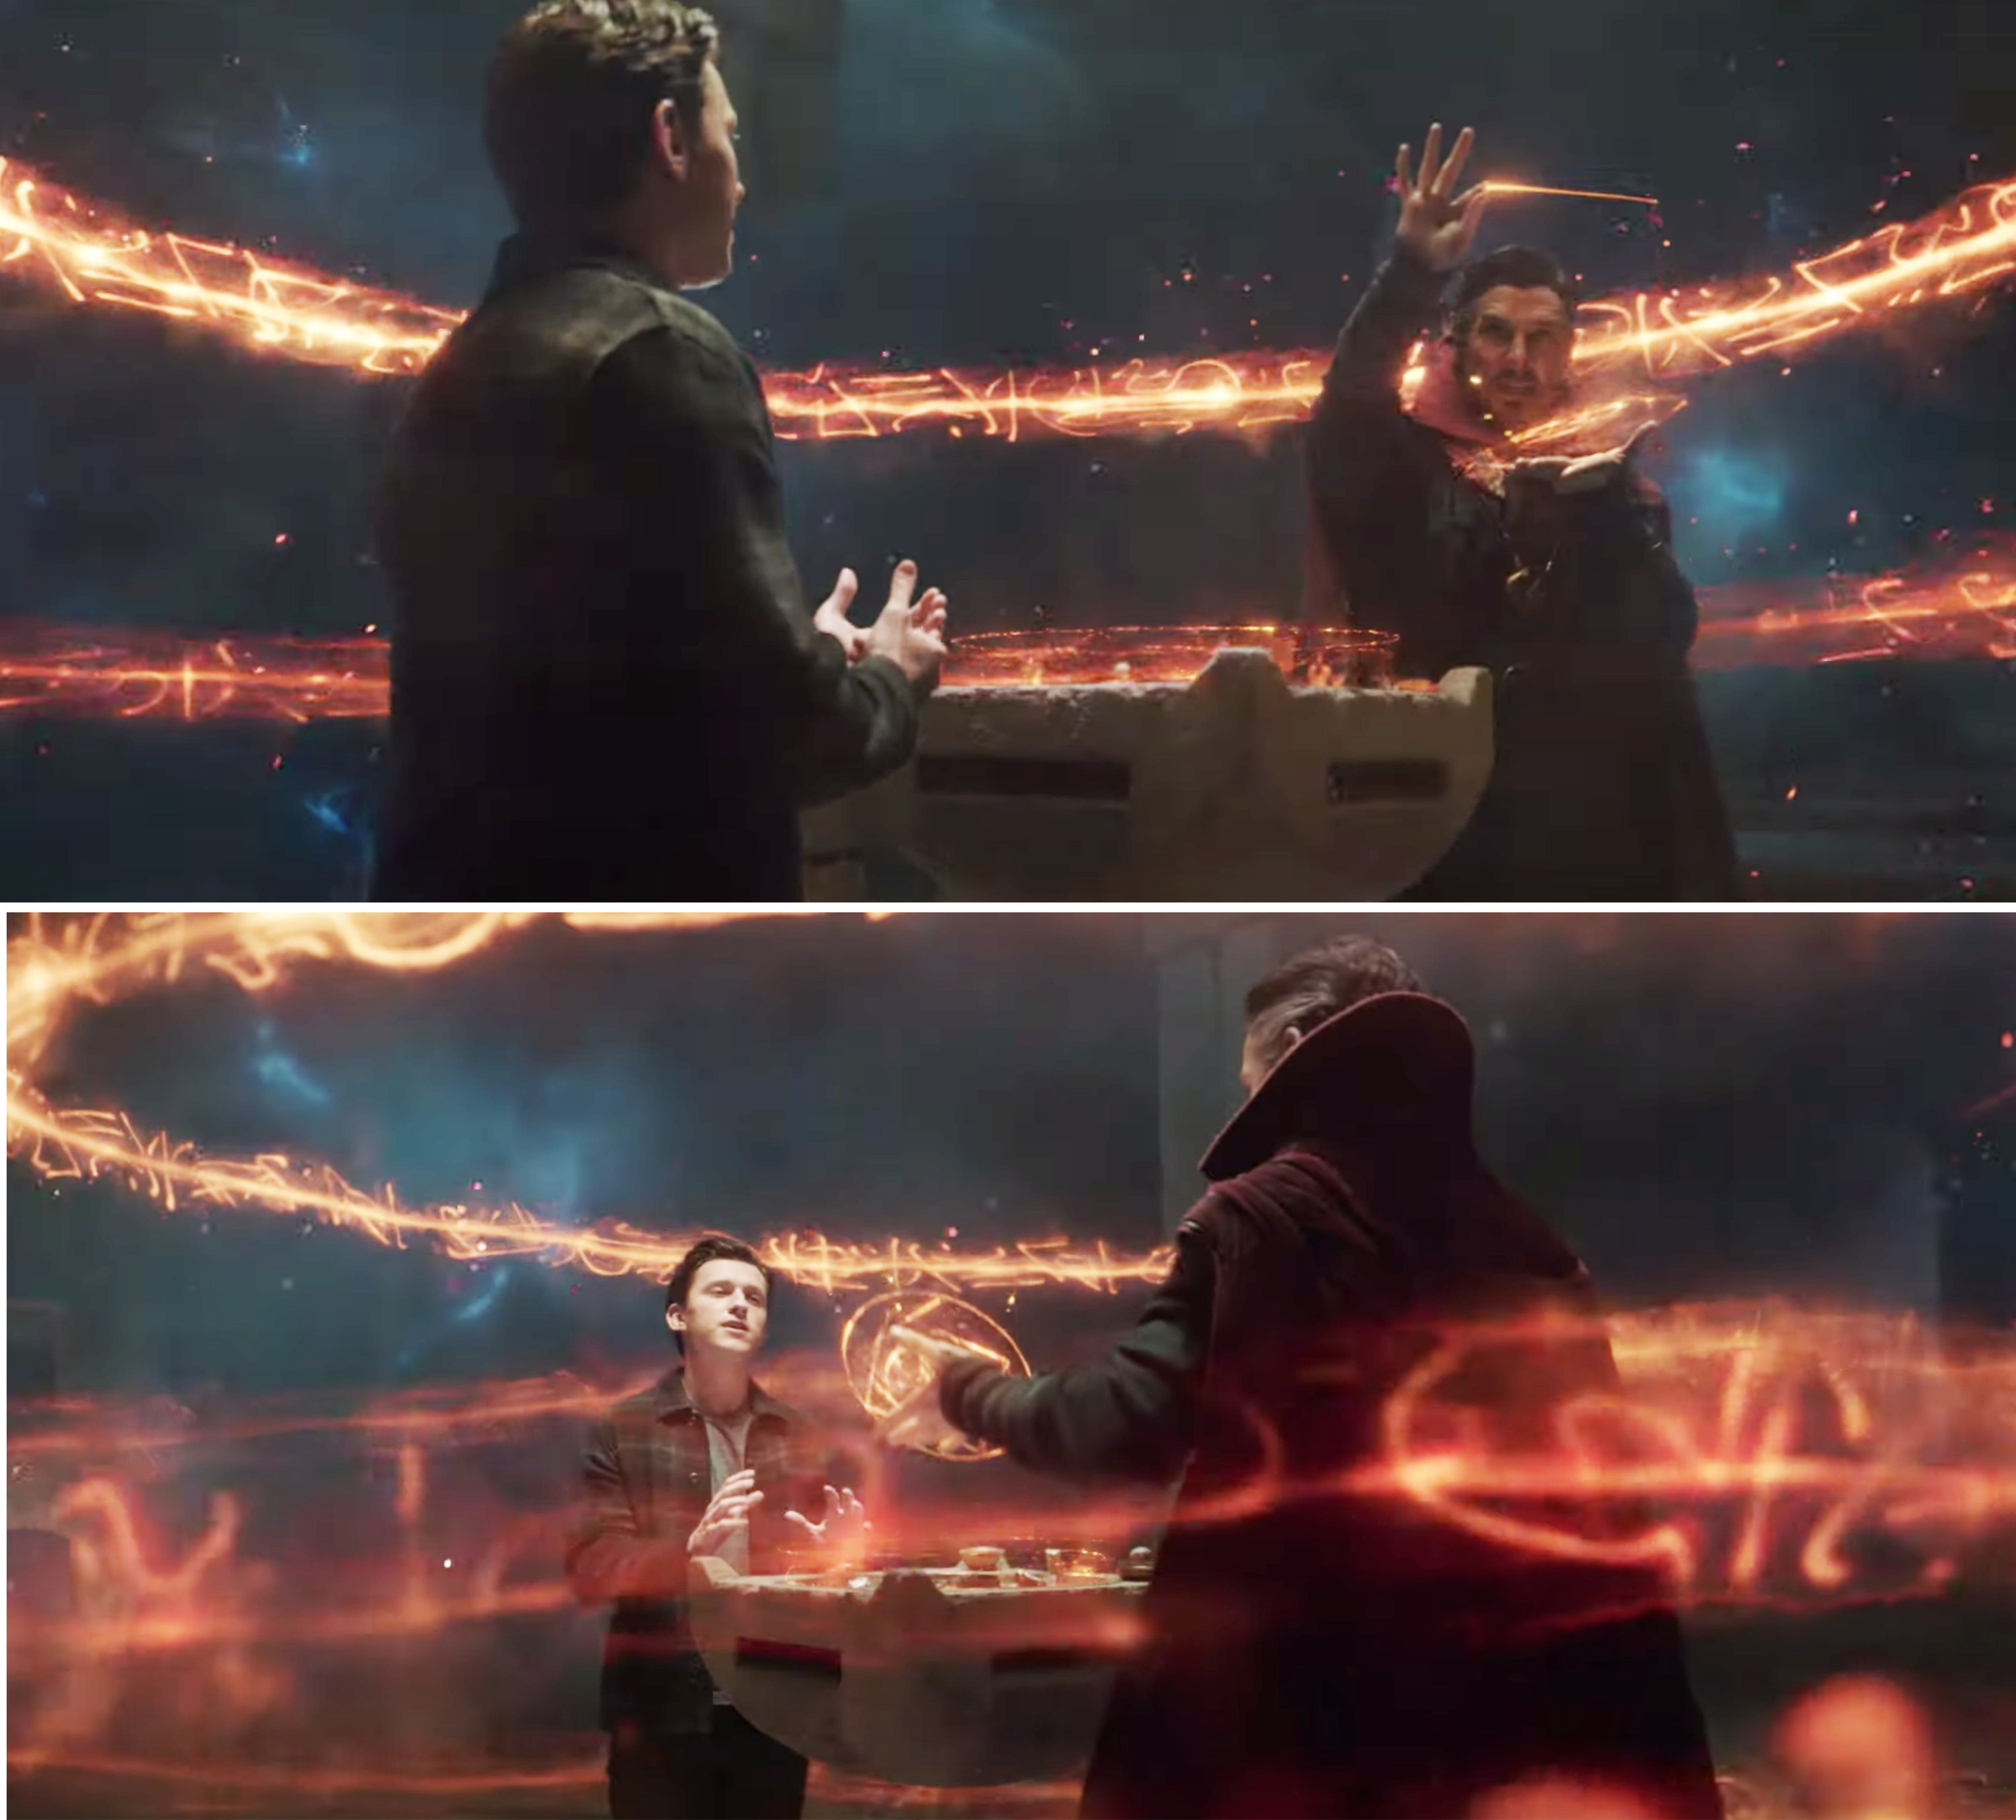 Peter and Doctor Strange using magic